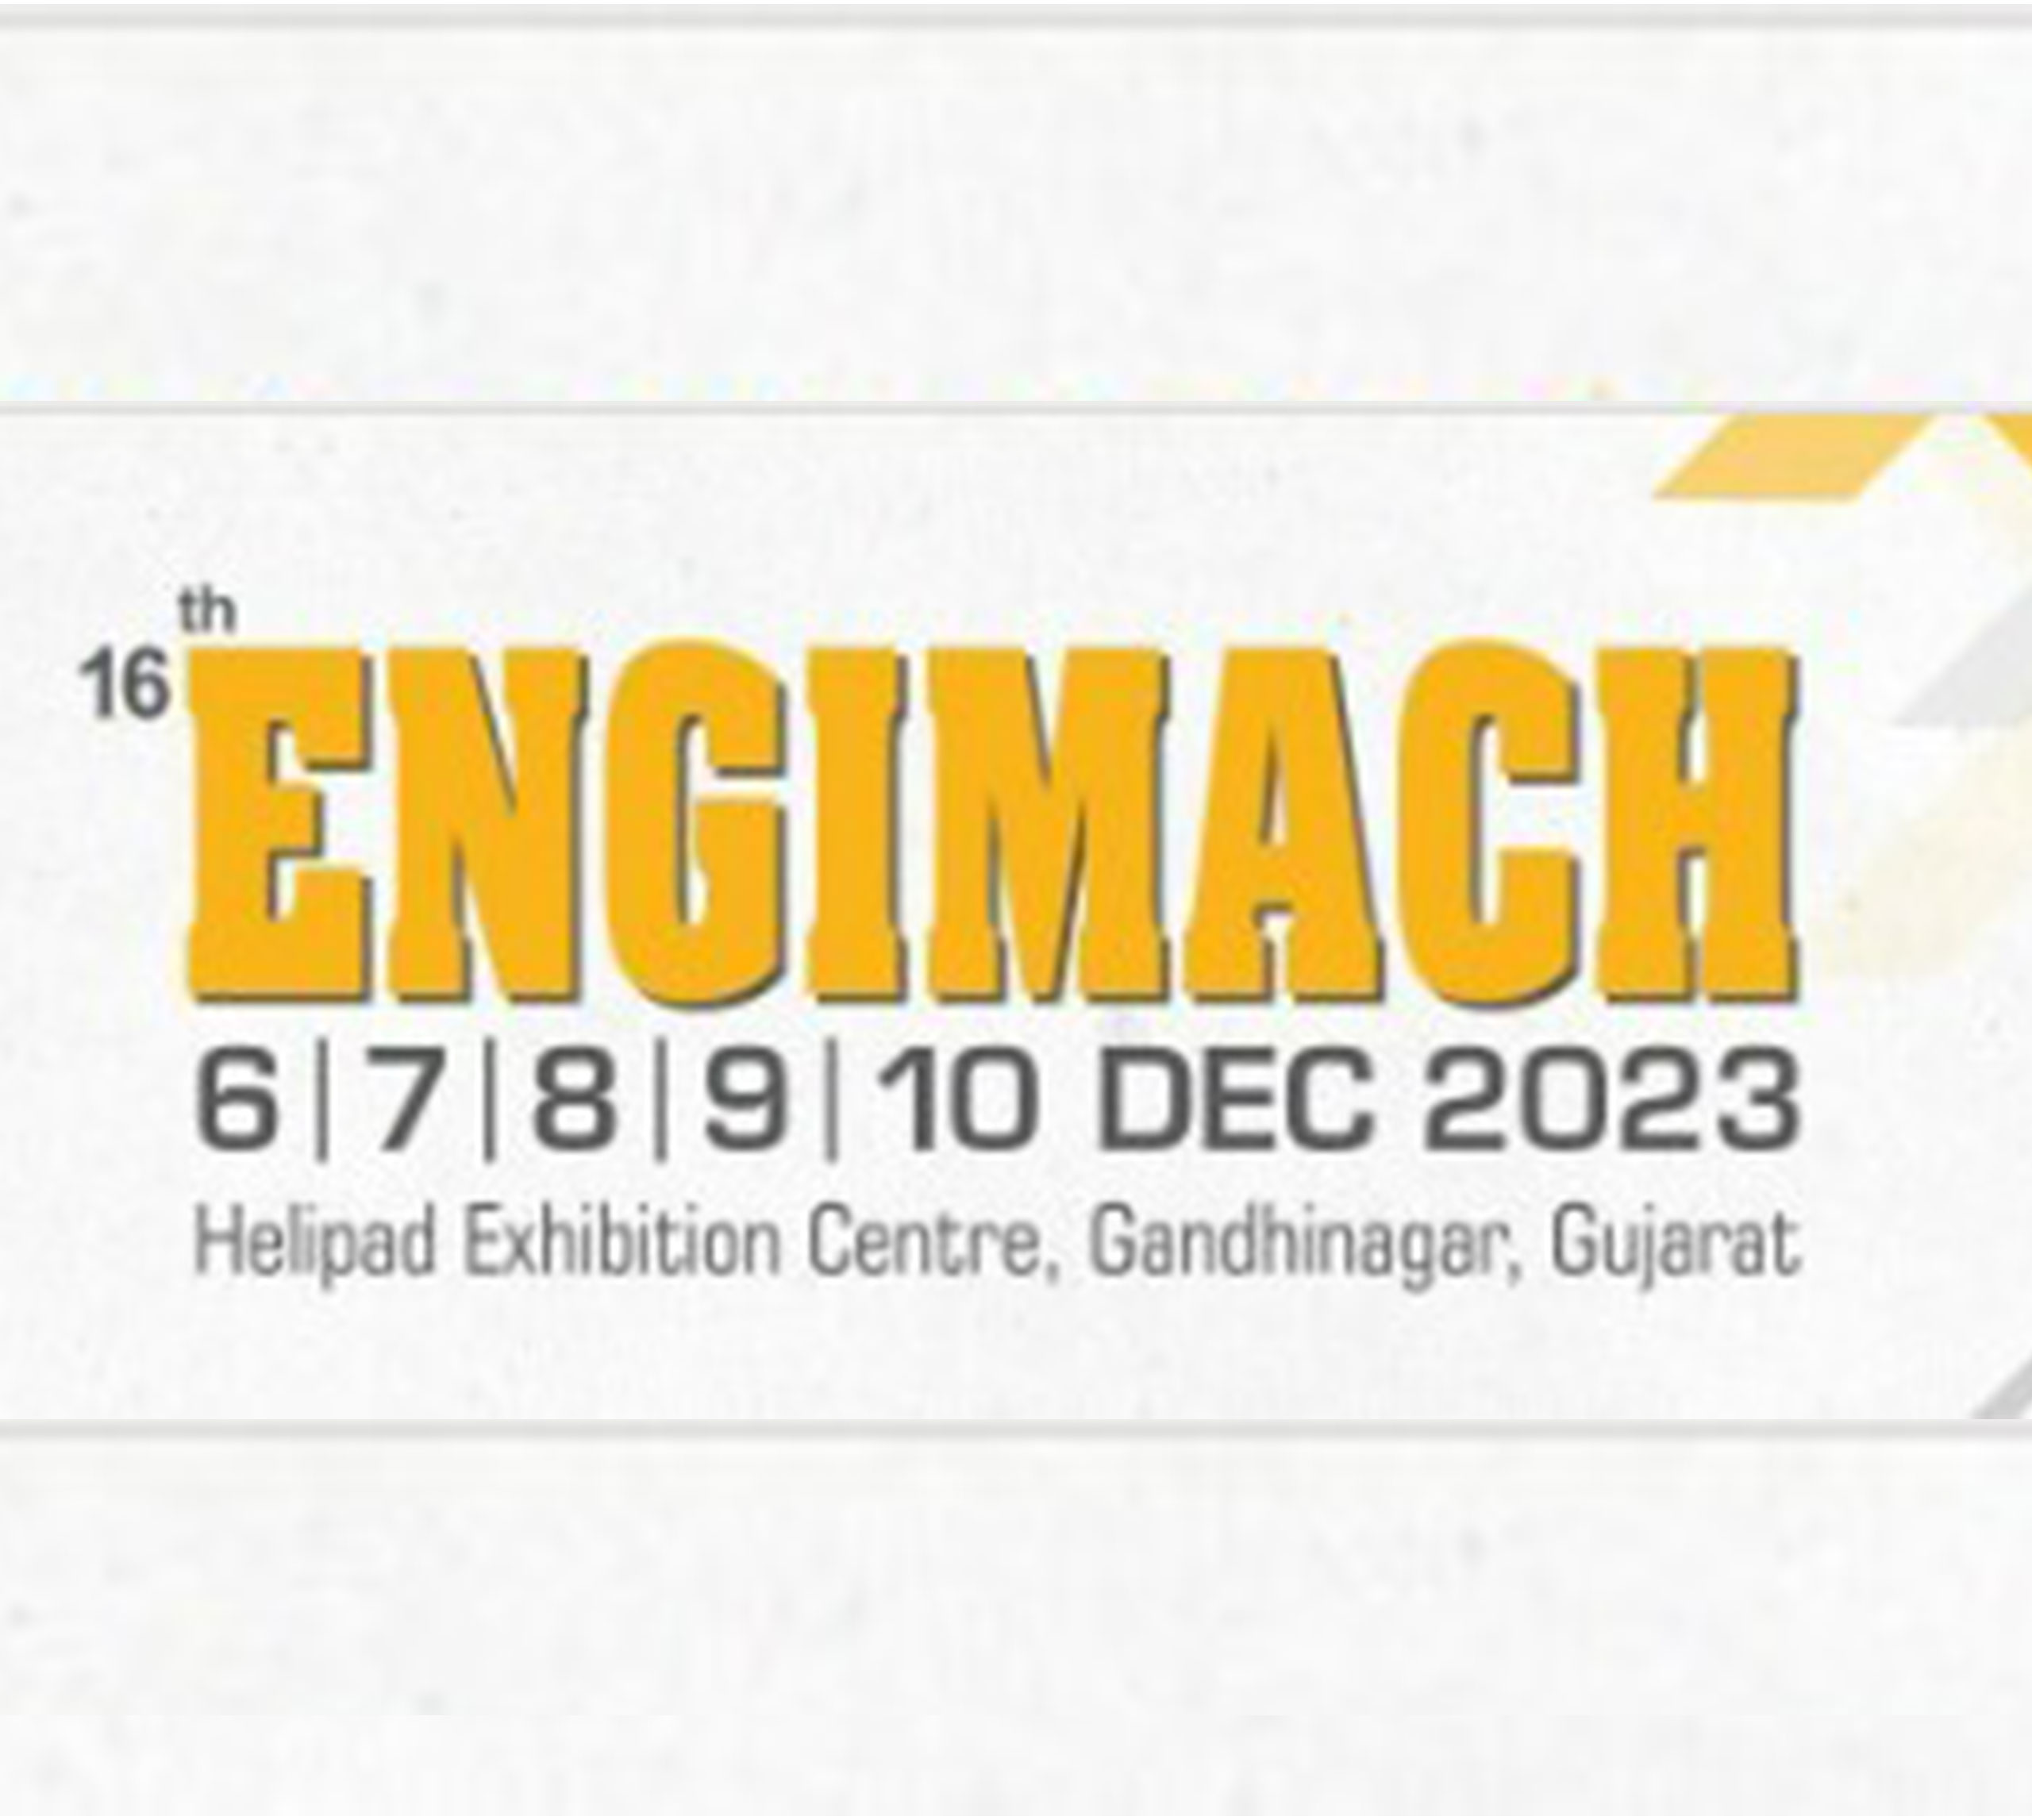 ENGIMACH 2023 Exhibition